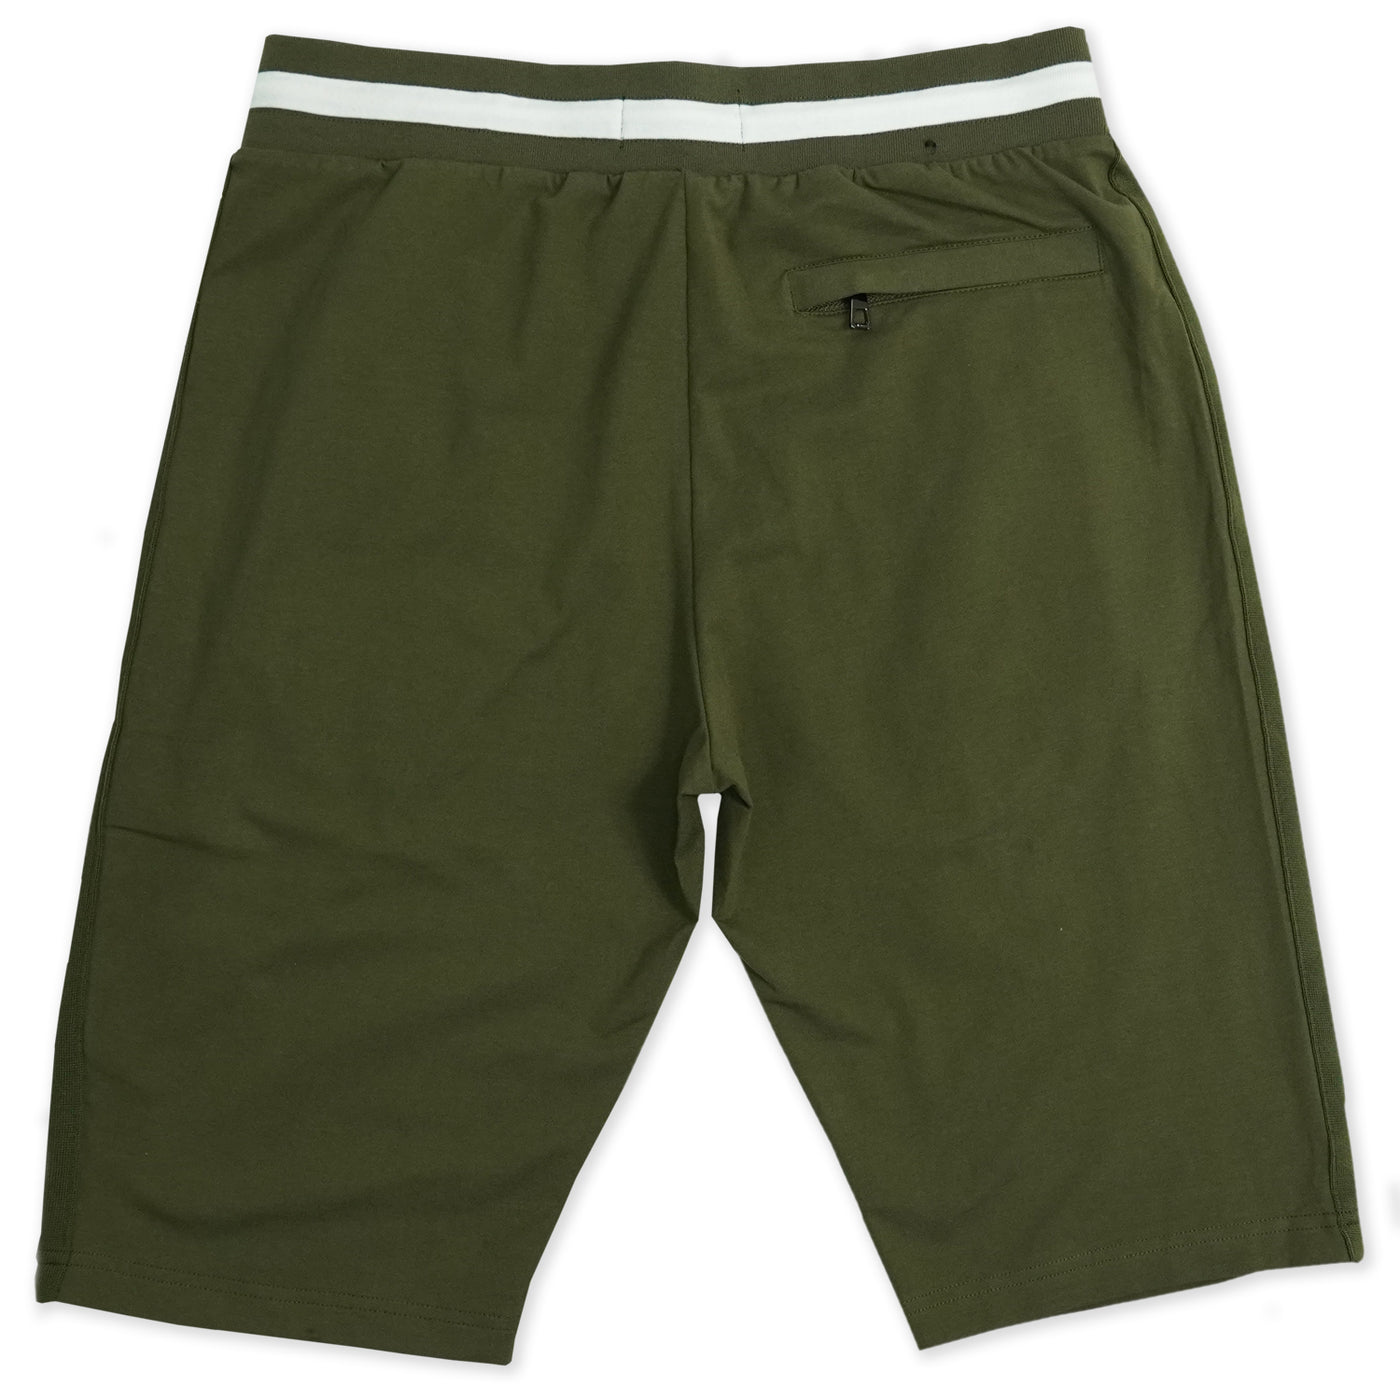 M600 Knit Shorts - Olive